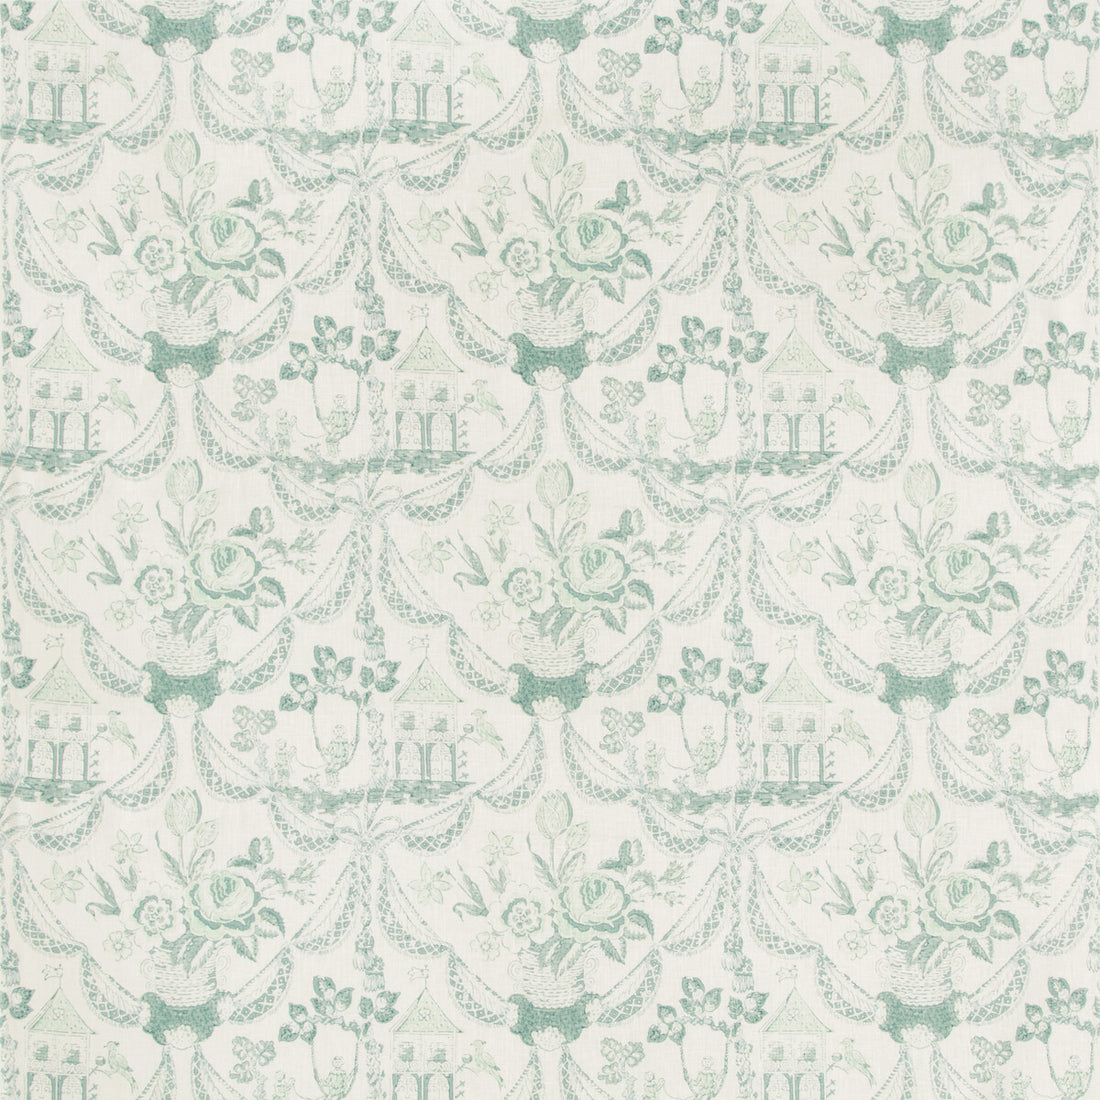 Bird &amp; Swing Hb fabric in aqua color - pattern 8019100.13.0 - by Brunschwig &amp; Fils